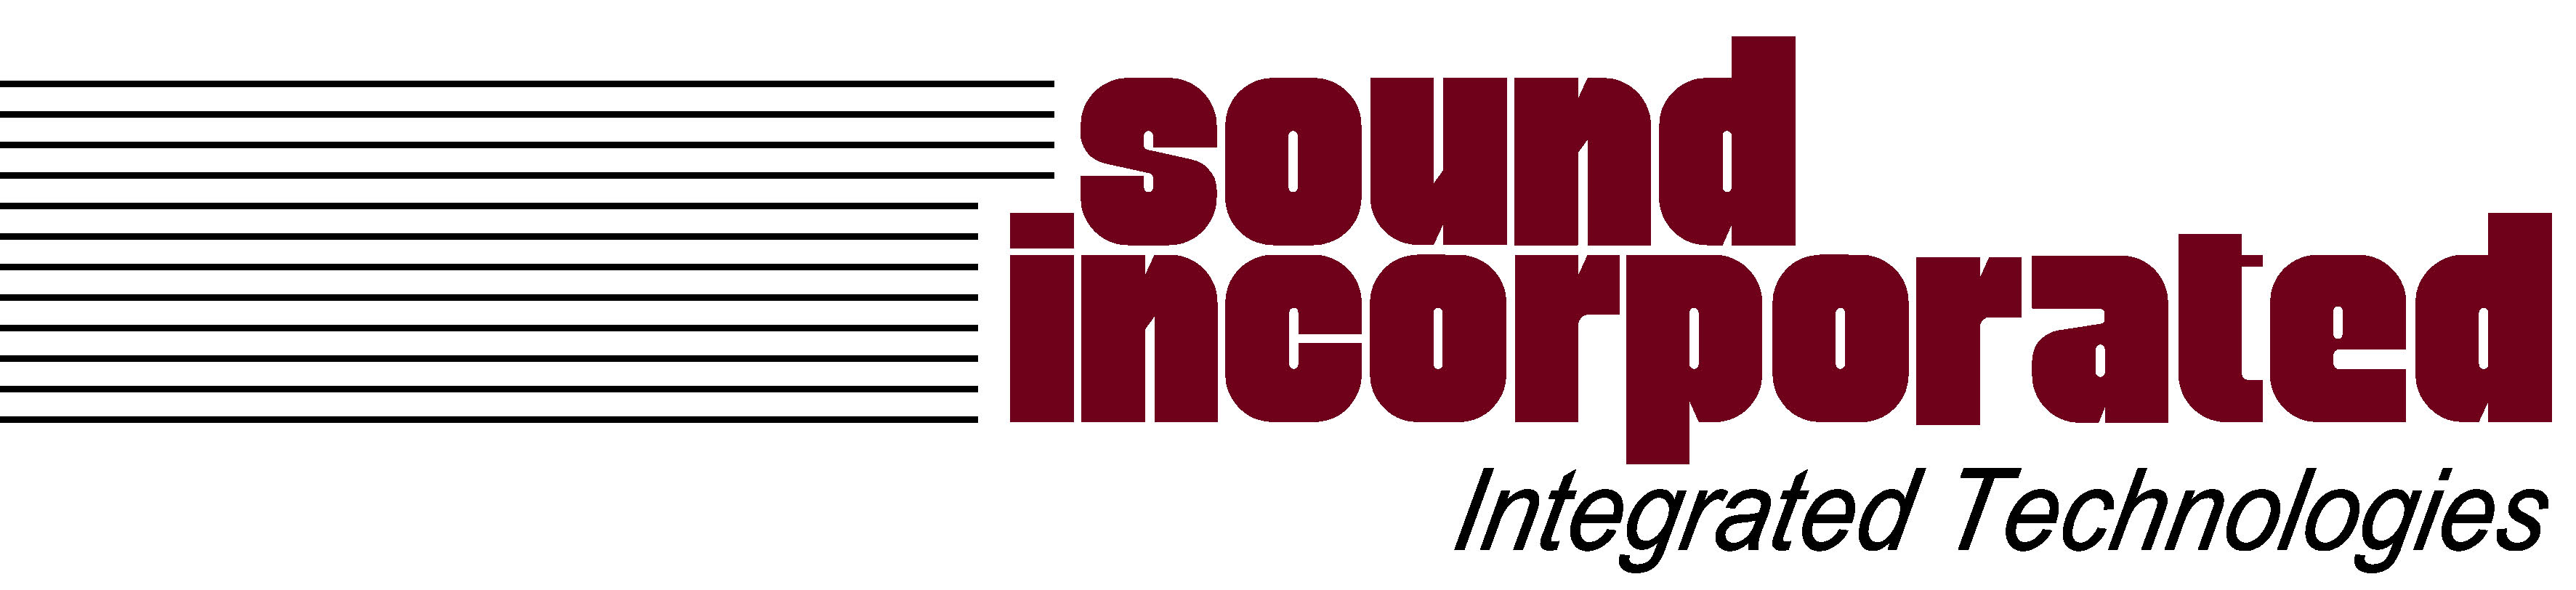 Sound Inc.